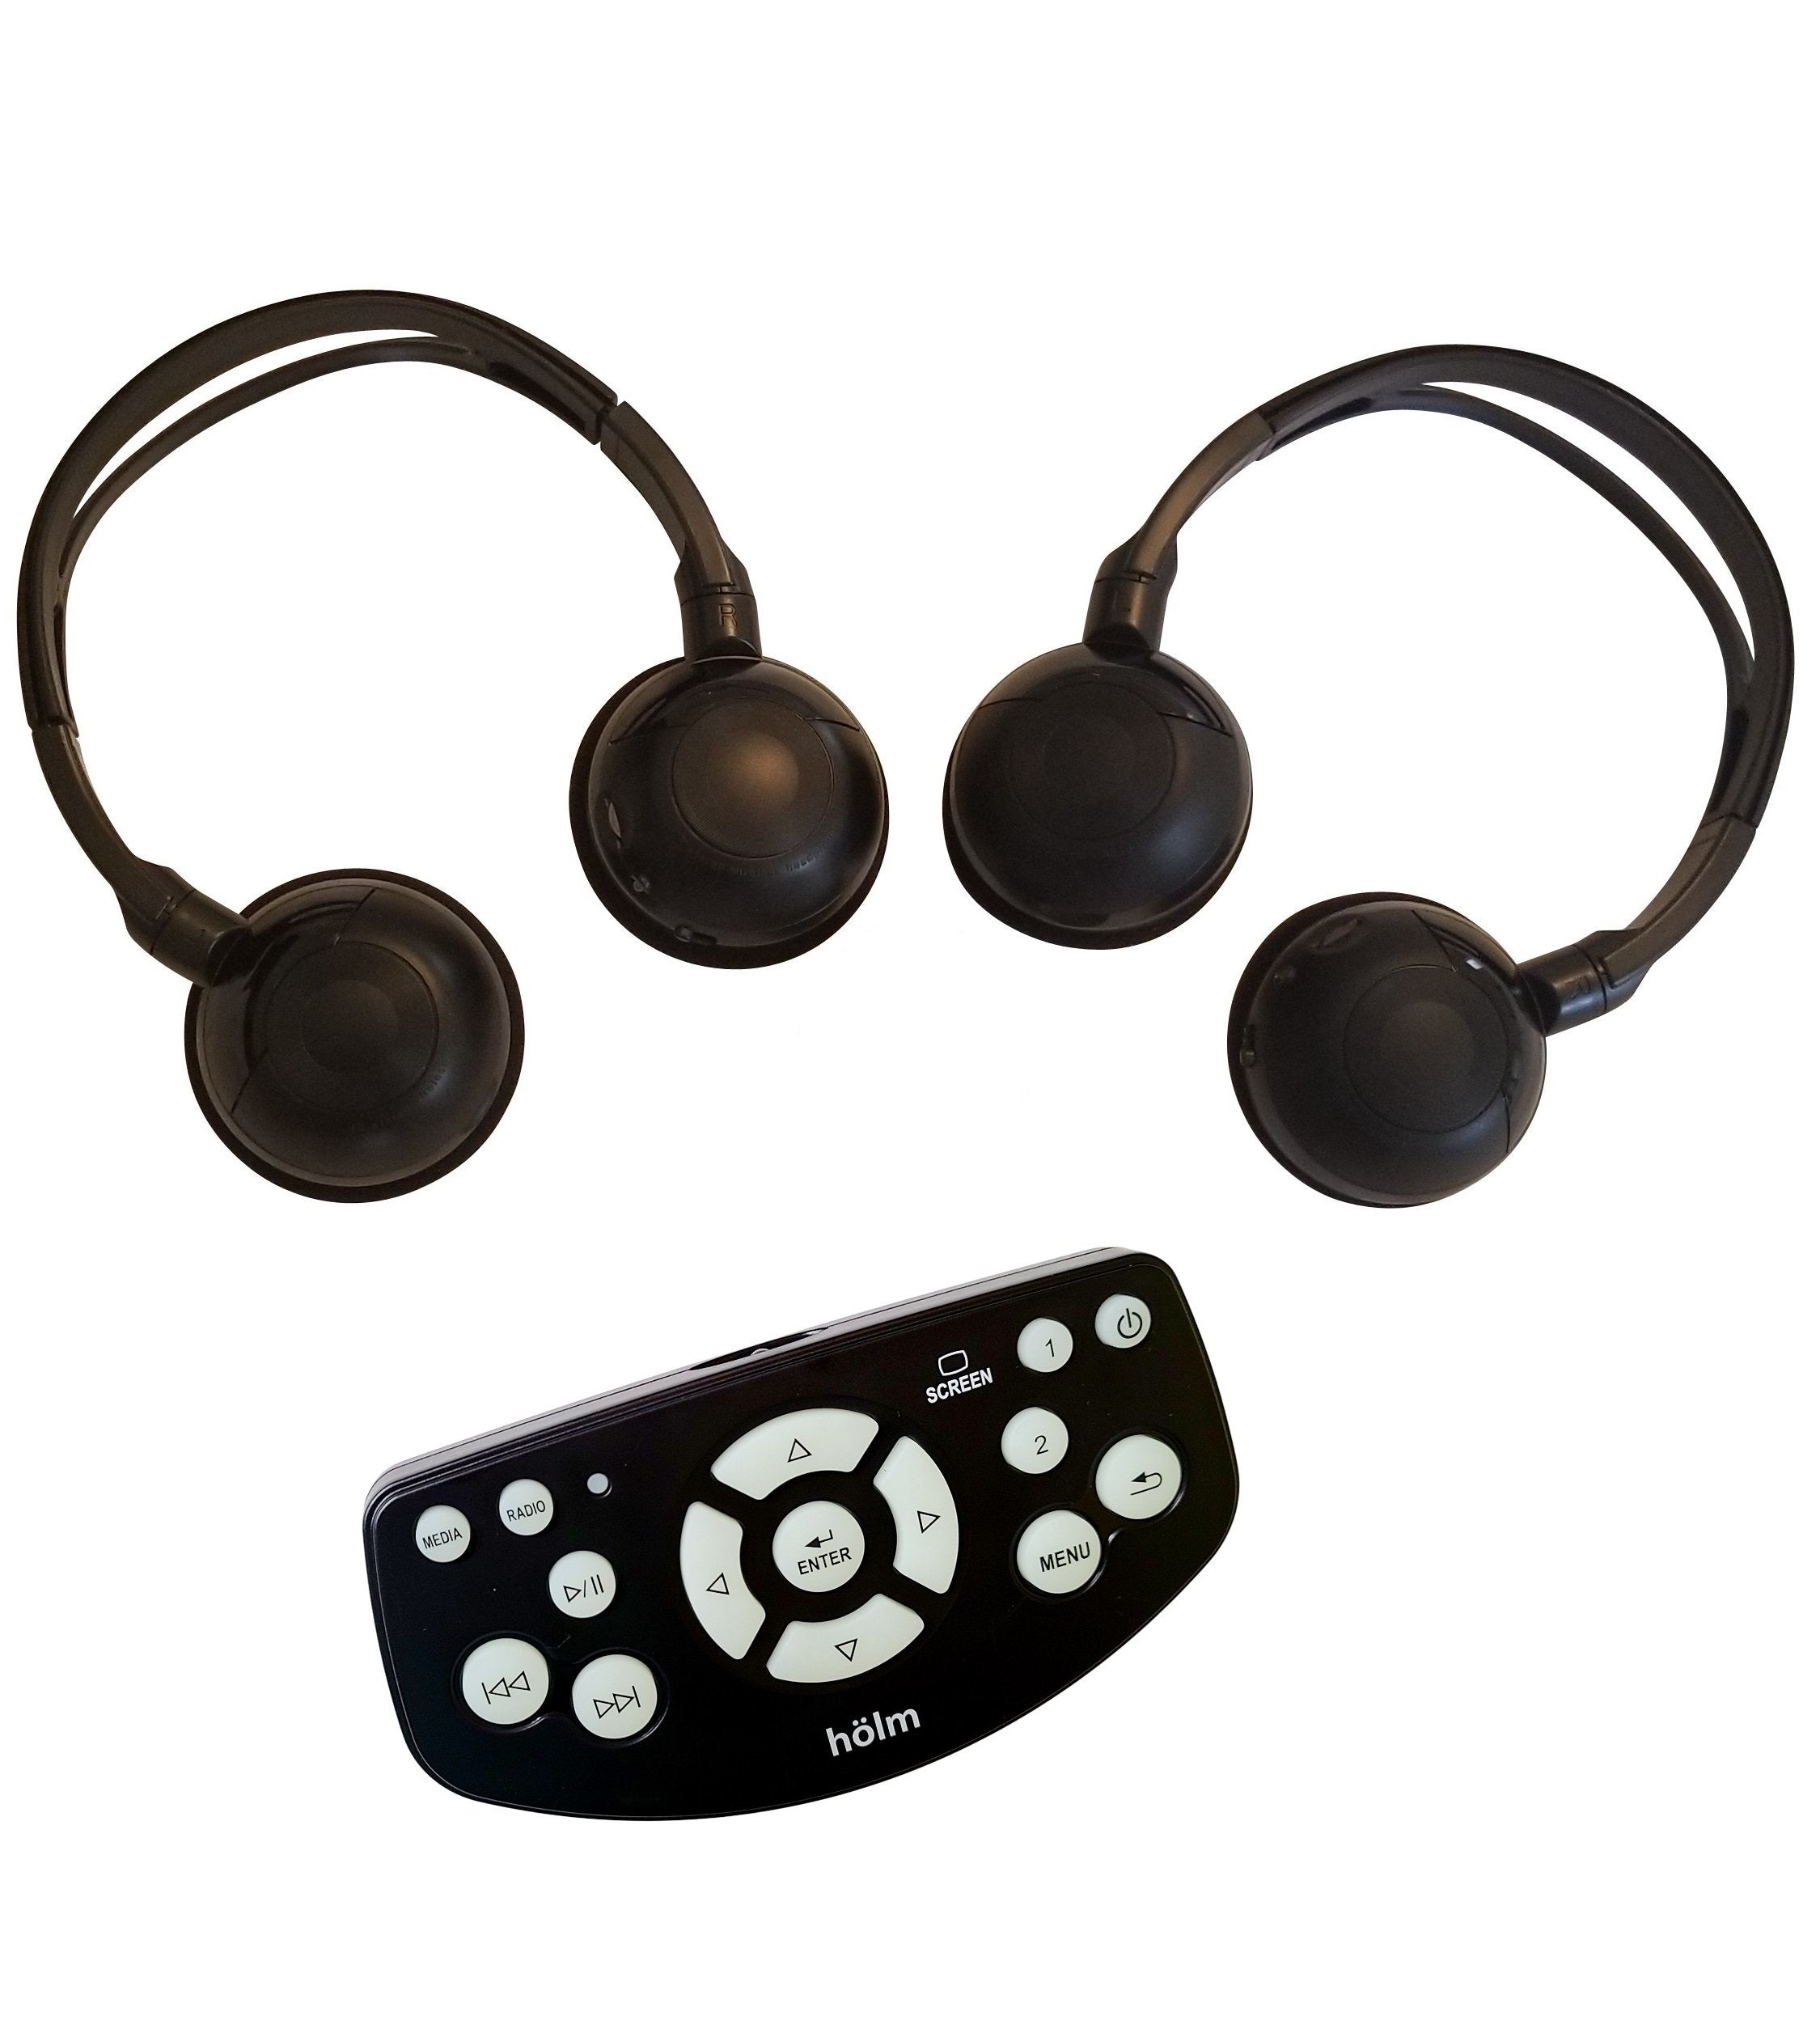 2016 GMC Yukon BluRay DVD Remote And Wireless Headphones